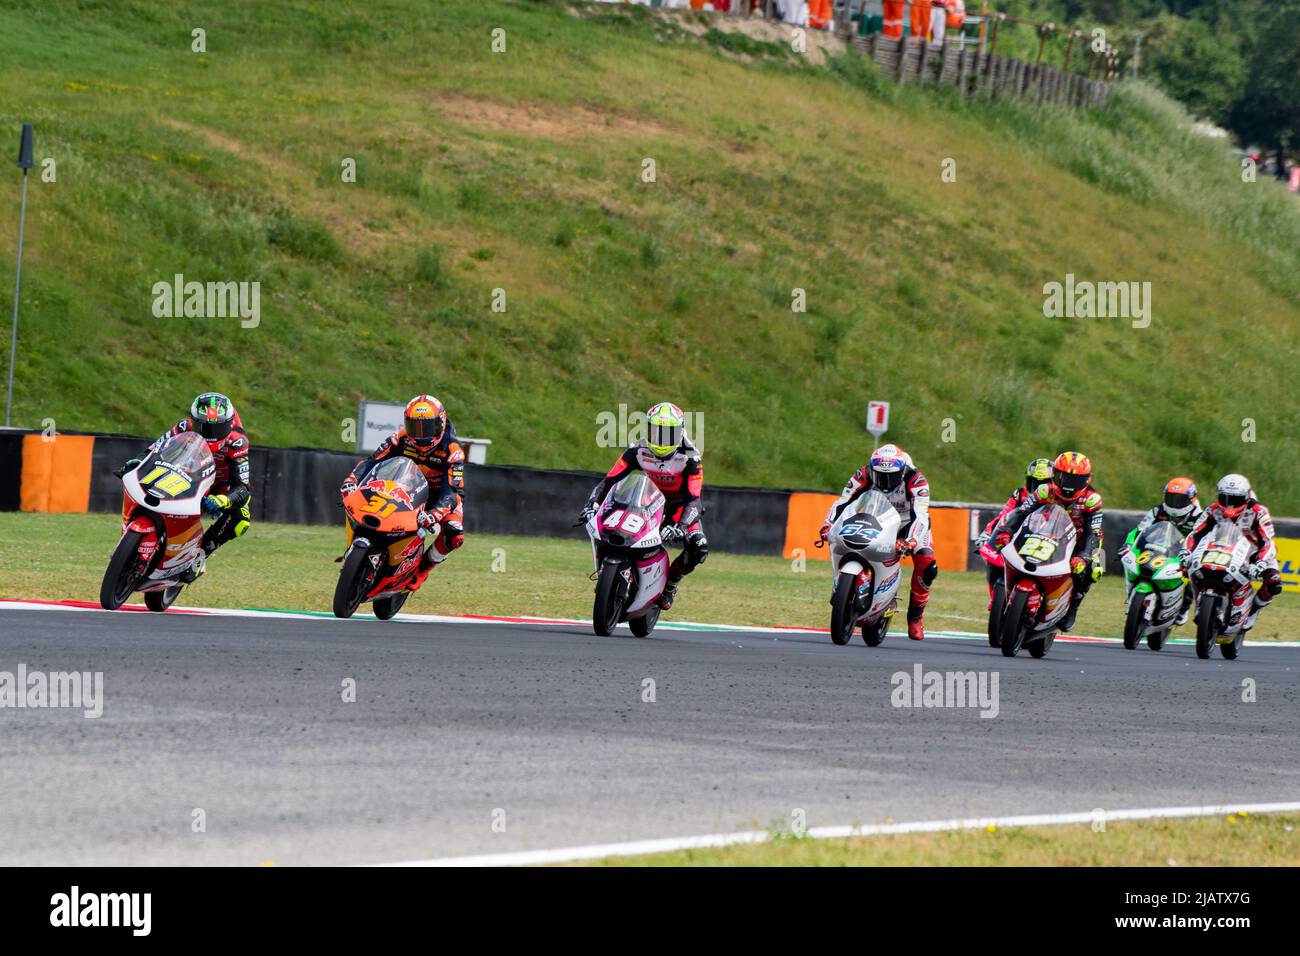 Mgello Circuit, scaperia, Italy. 29th May, 2022 Motogp Grand Prix Of Italy; Moto3 race moment Stock Photo